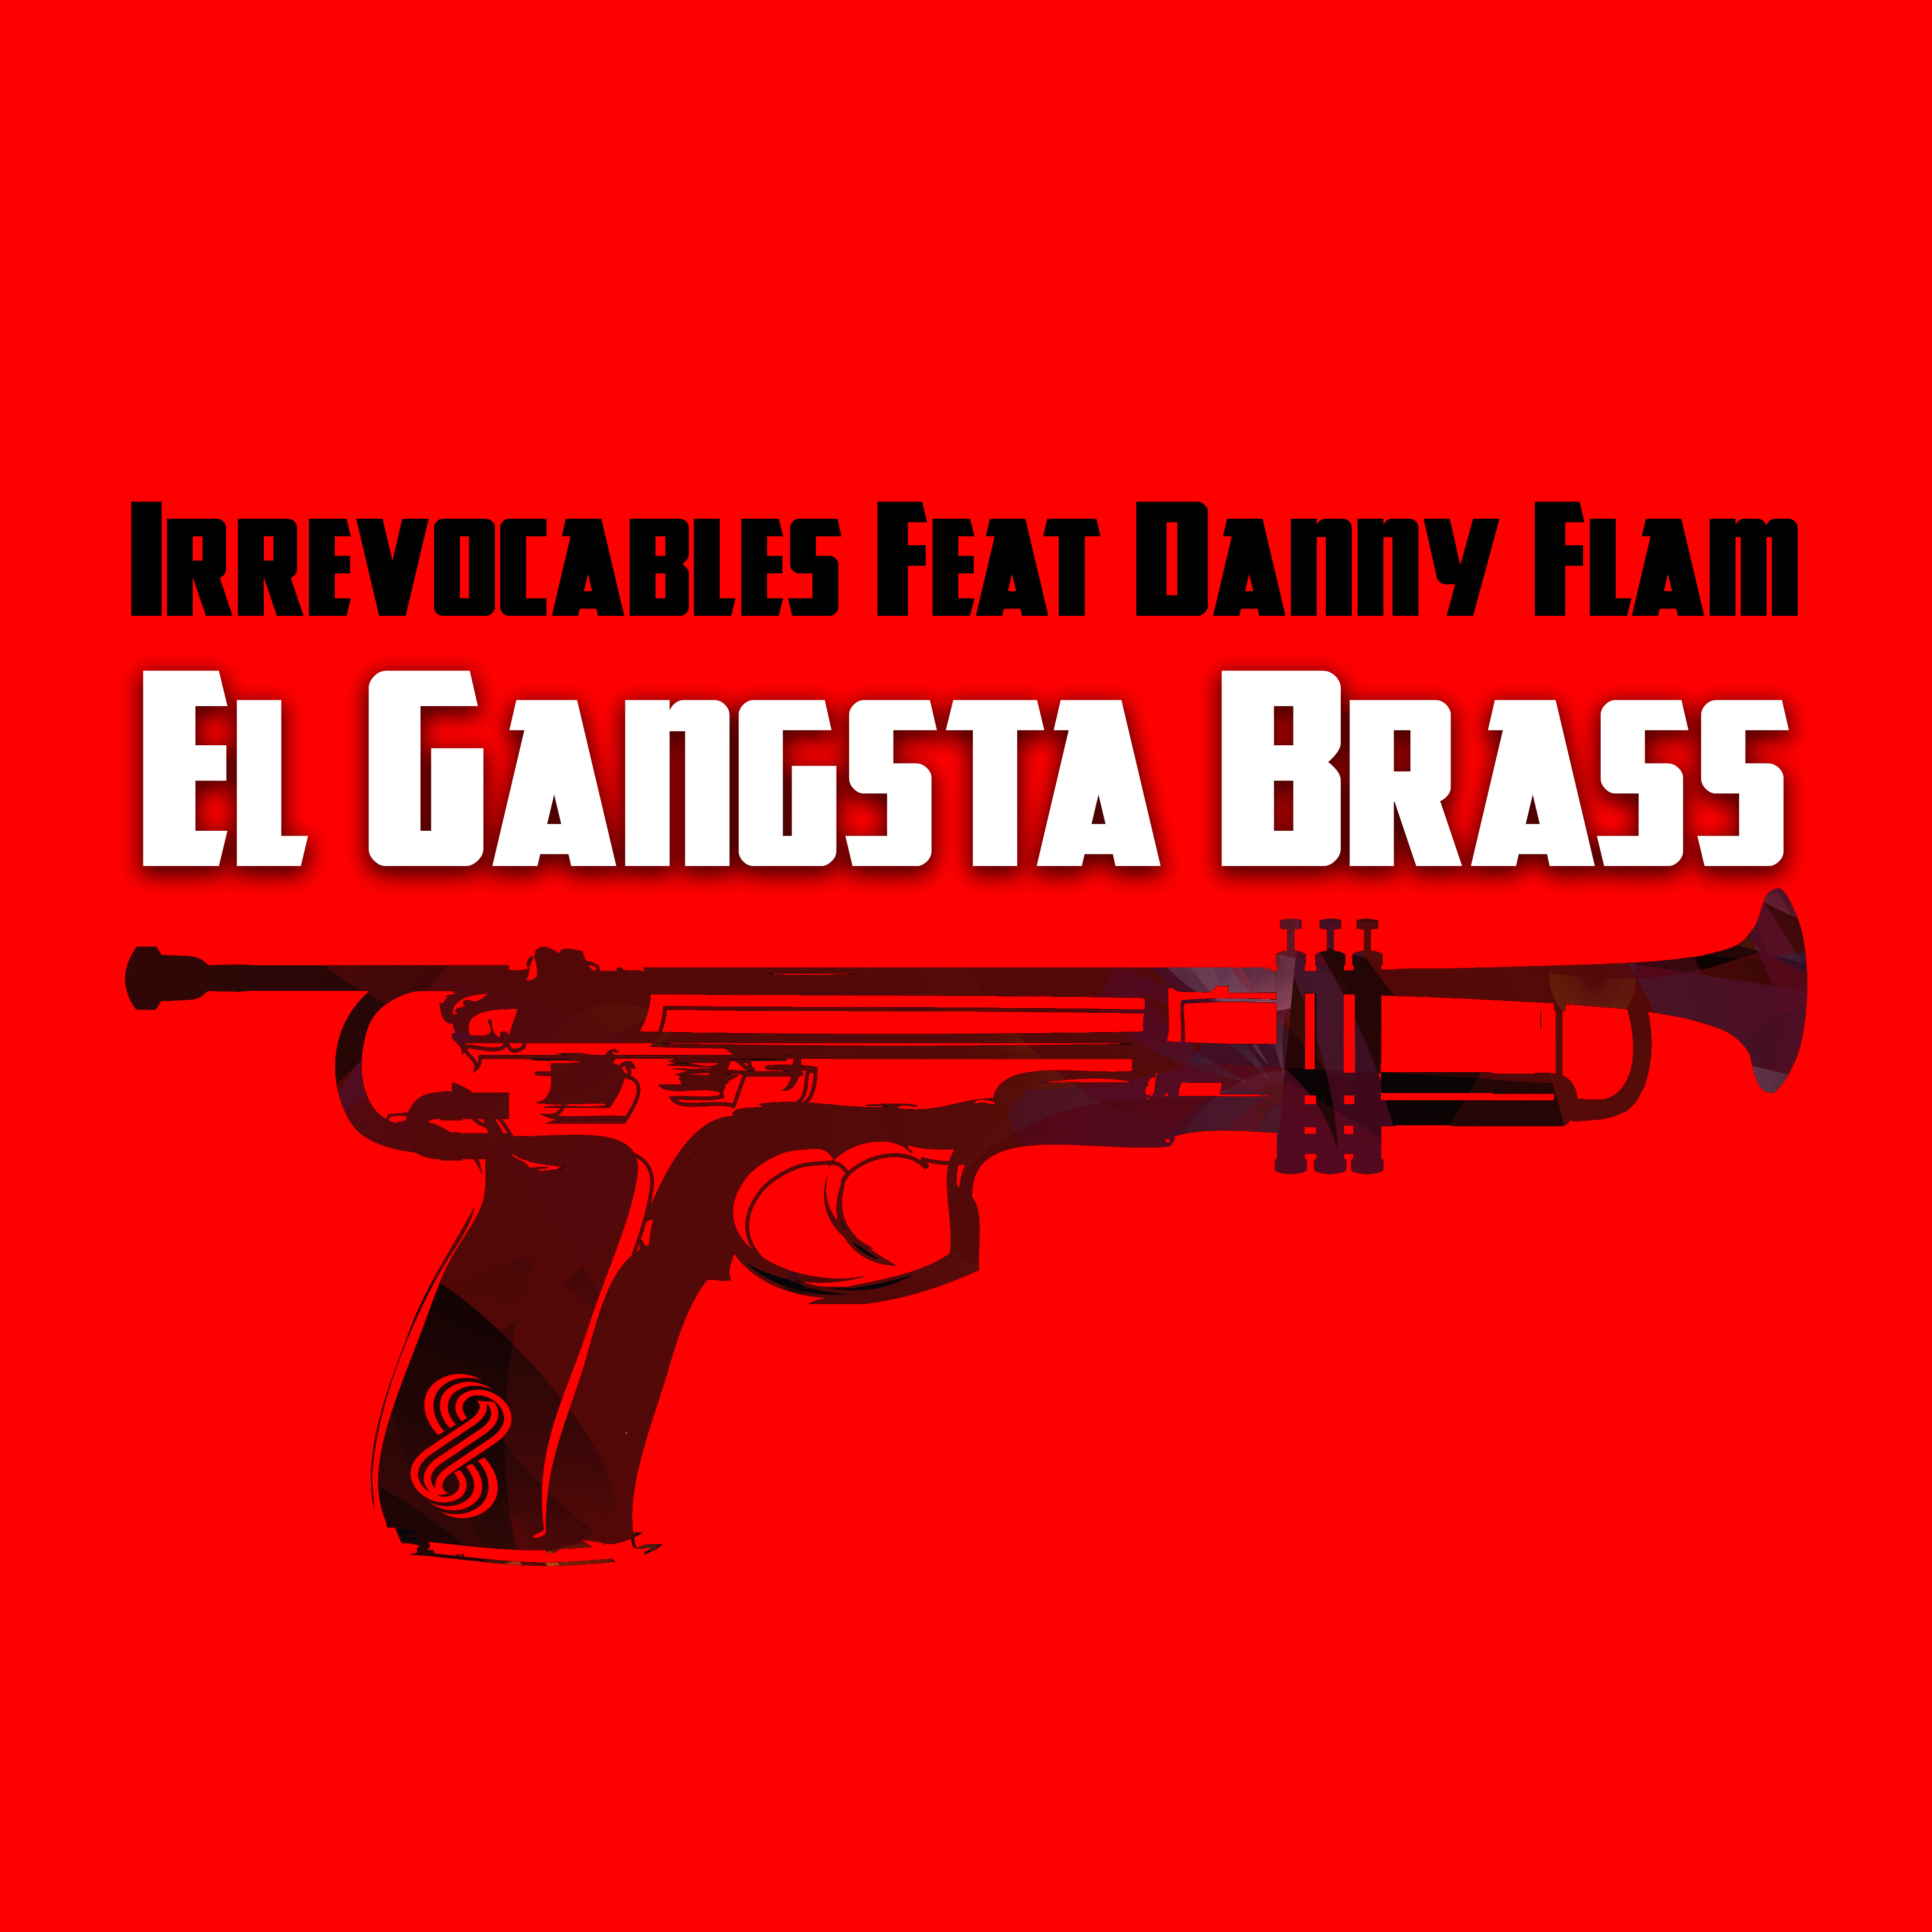 El Gangsta Brass by Los Irrevocalbles feat Danny Flam